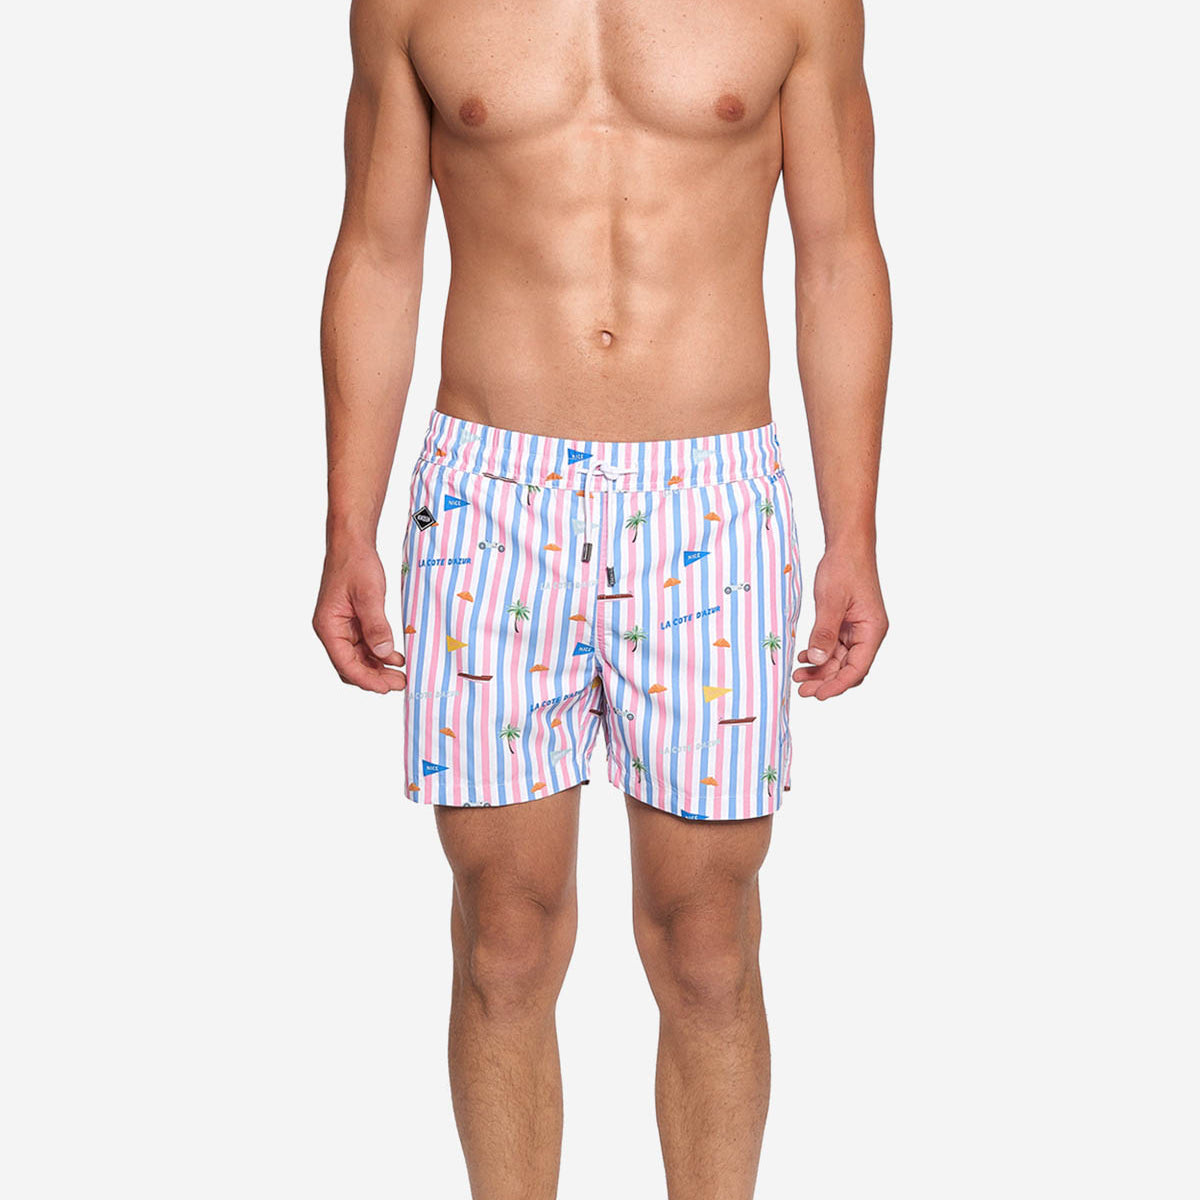 Model wearing striped printed mid length swim trunks